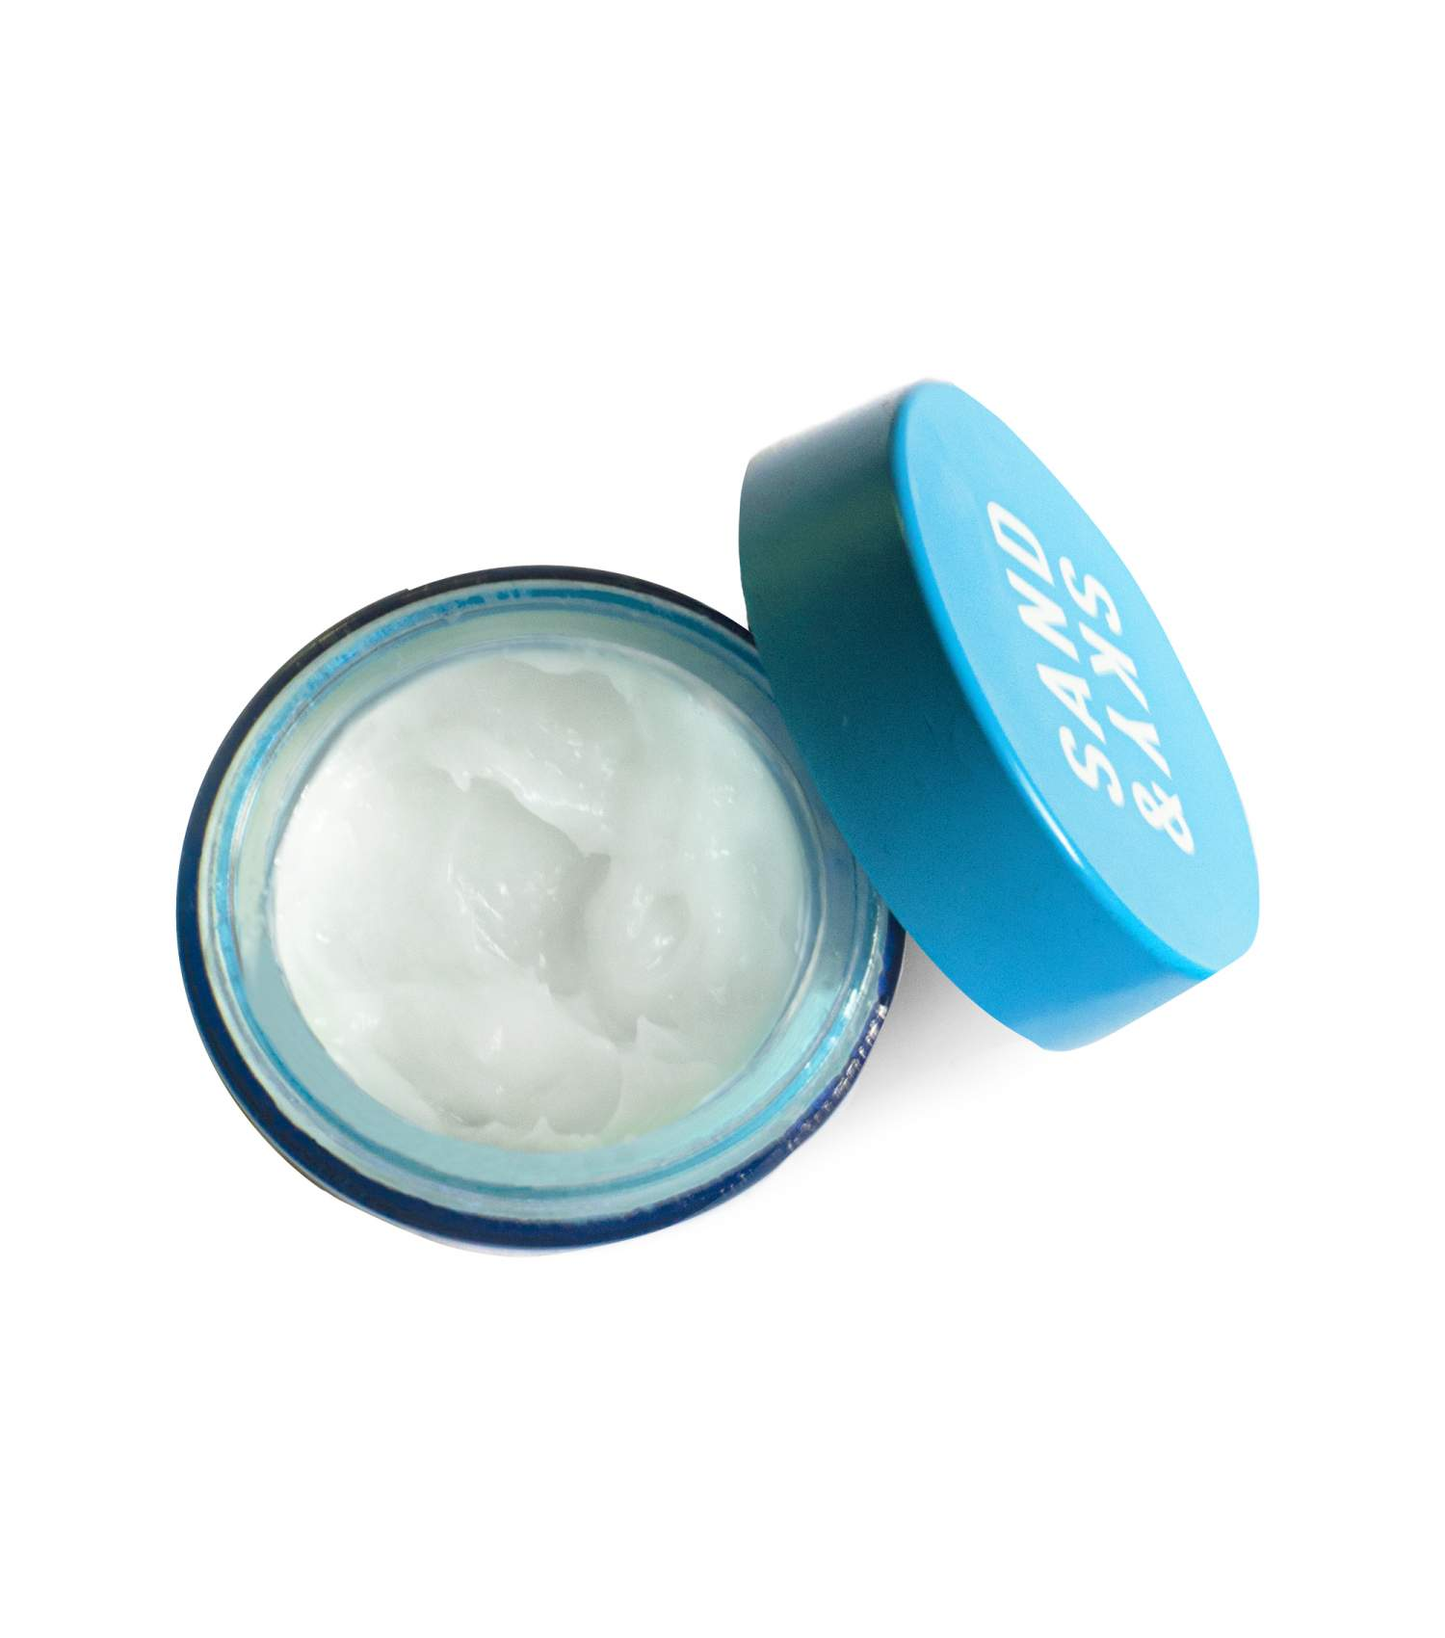 Sand & Sky Tasmanian Spring Water - Hydration Boost Cream